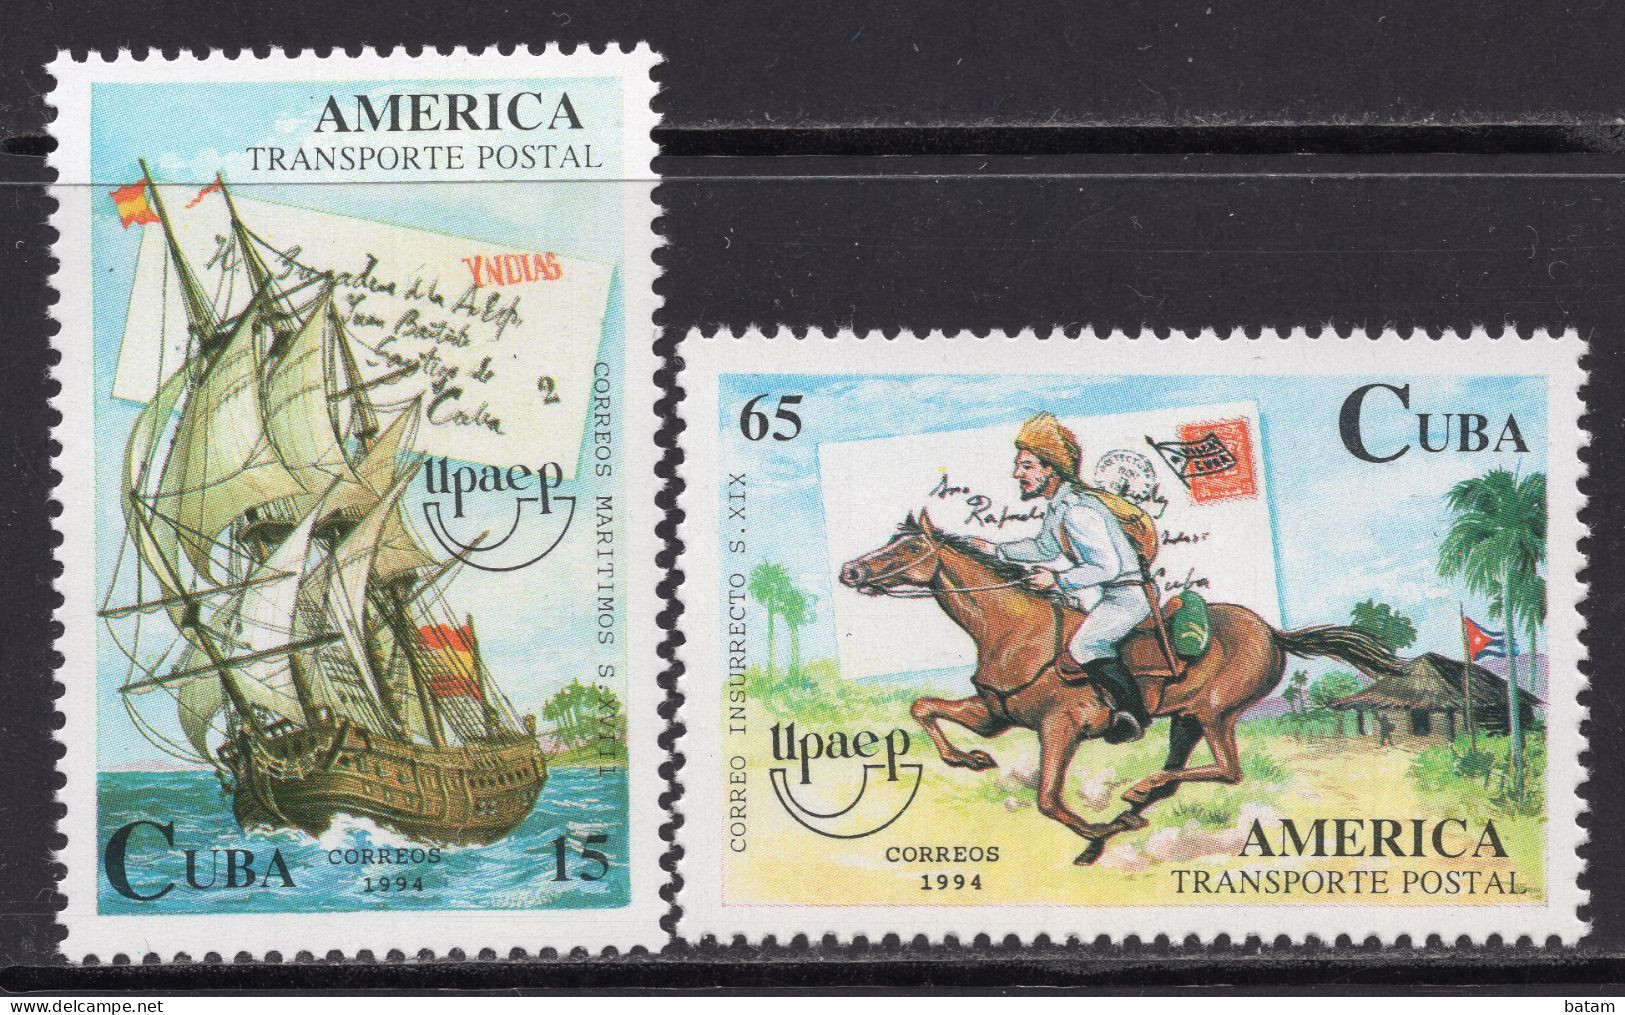 CUBA 1994 - Postal Transport - America - Ship - Hors - MNH Set - Nuevos